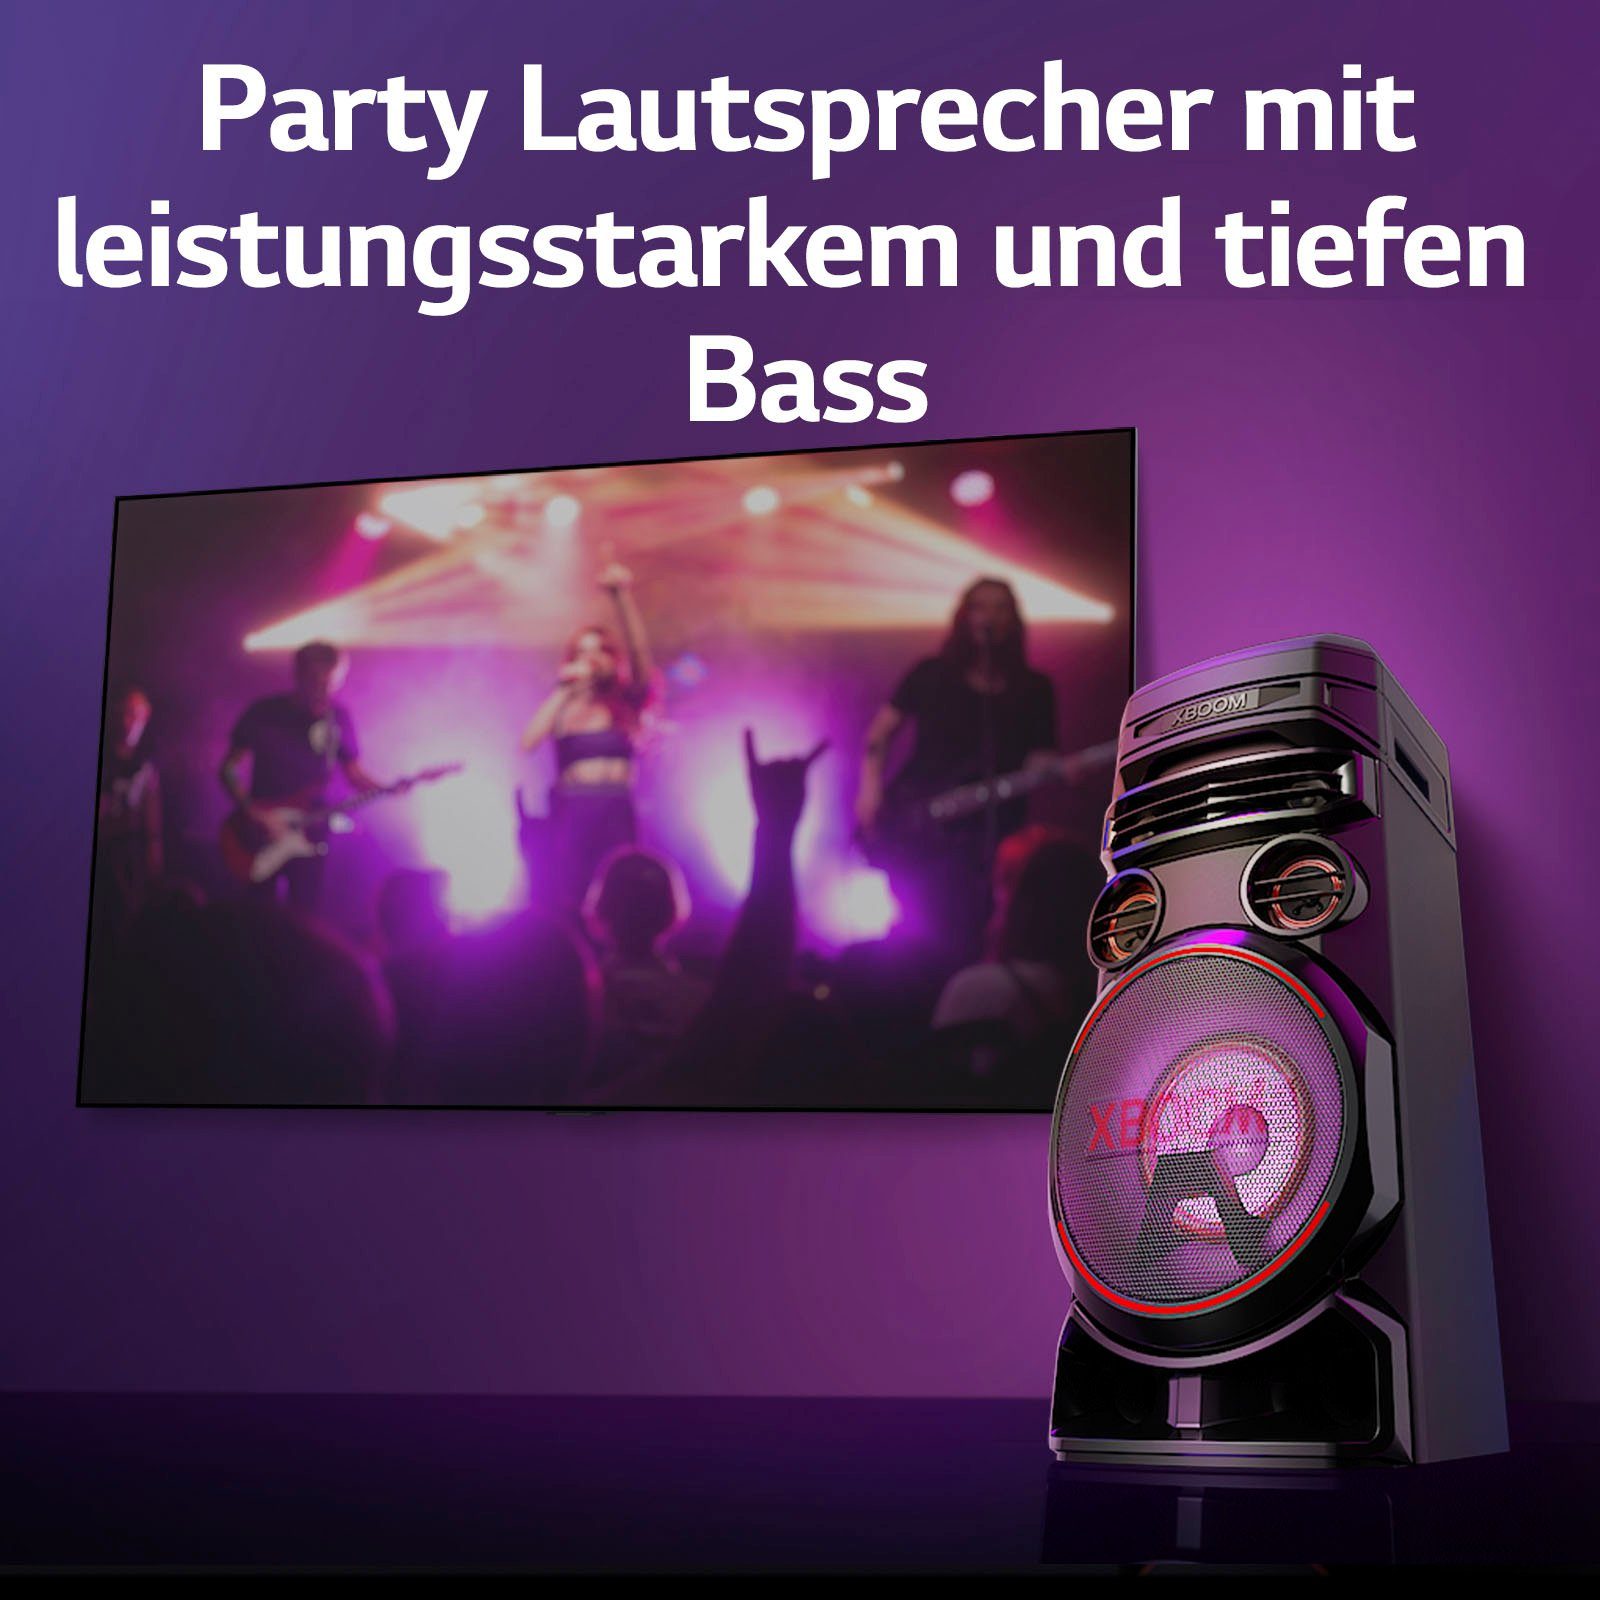 Stereo RNC7 LG (Bluetooth) XBOOM Party-Lautsprecher